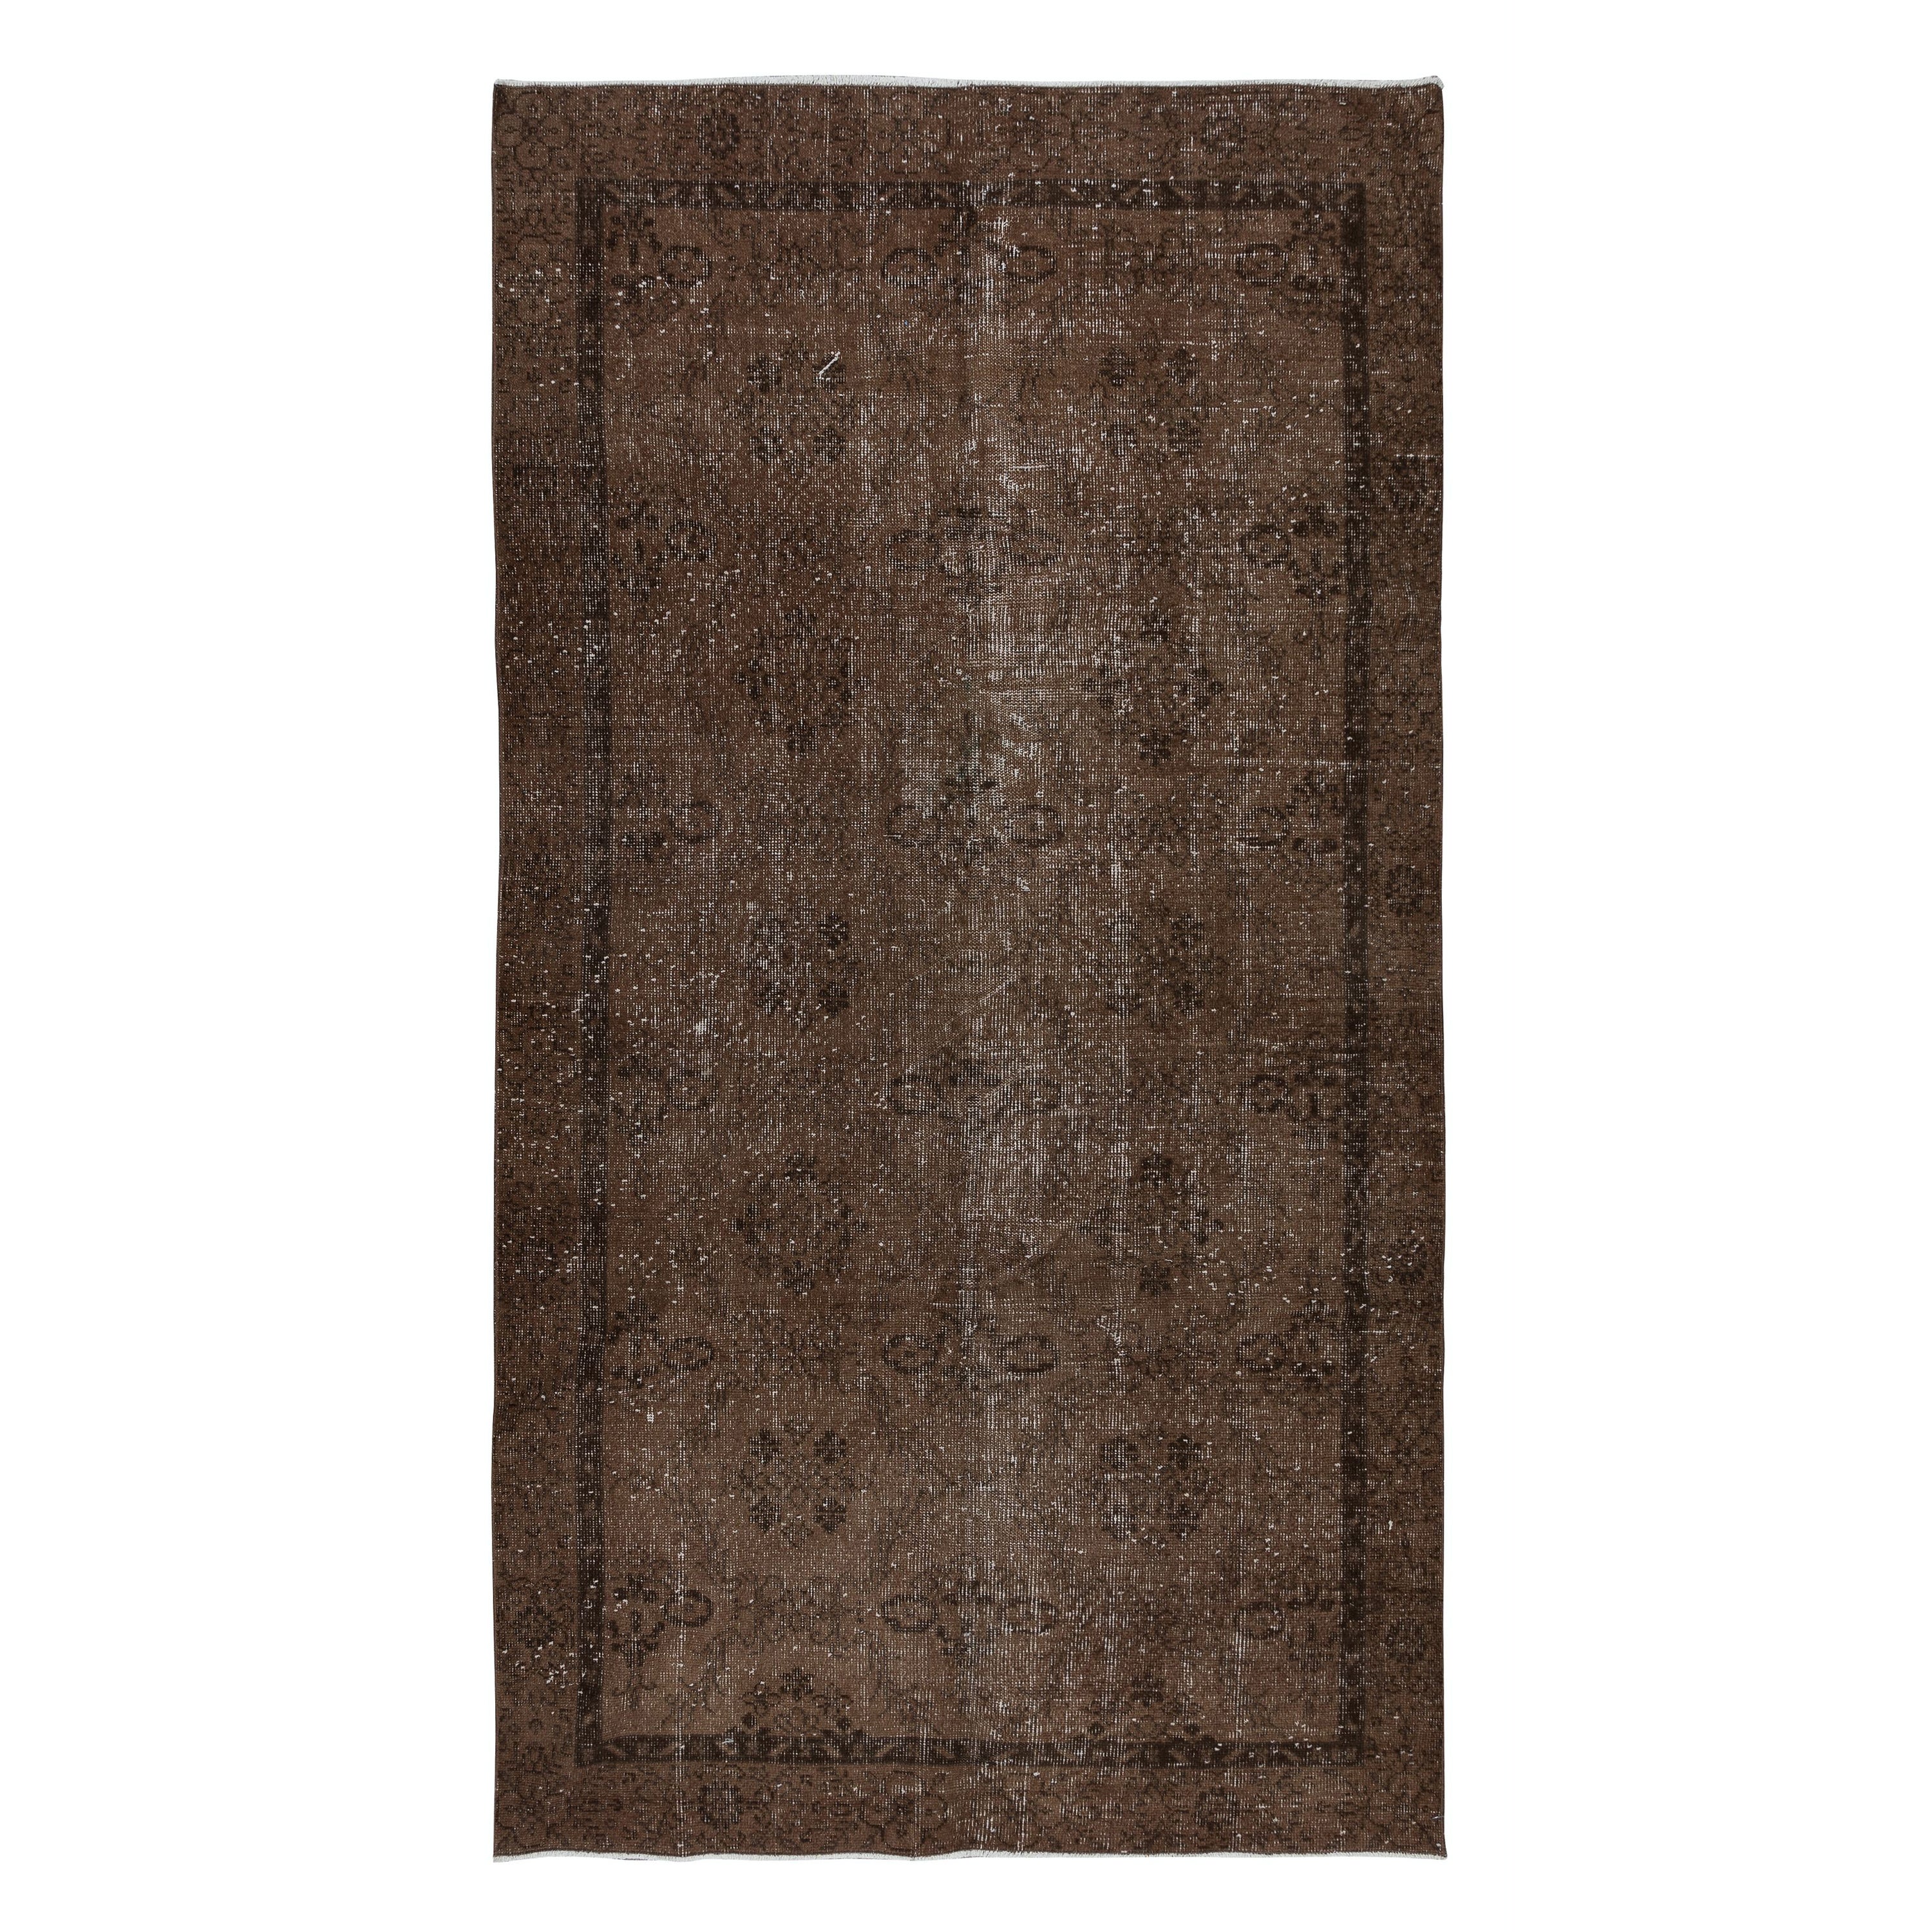 4.8x9.2 Ft Brown Handmade Wool & Cotton Rug, Contemporary Turkish Carpet im Angebot